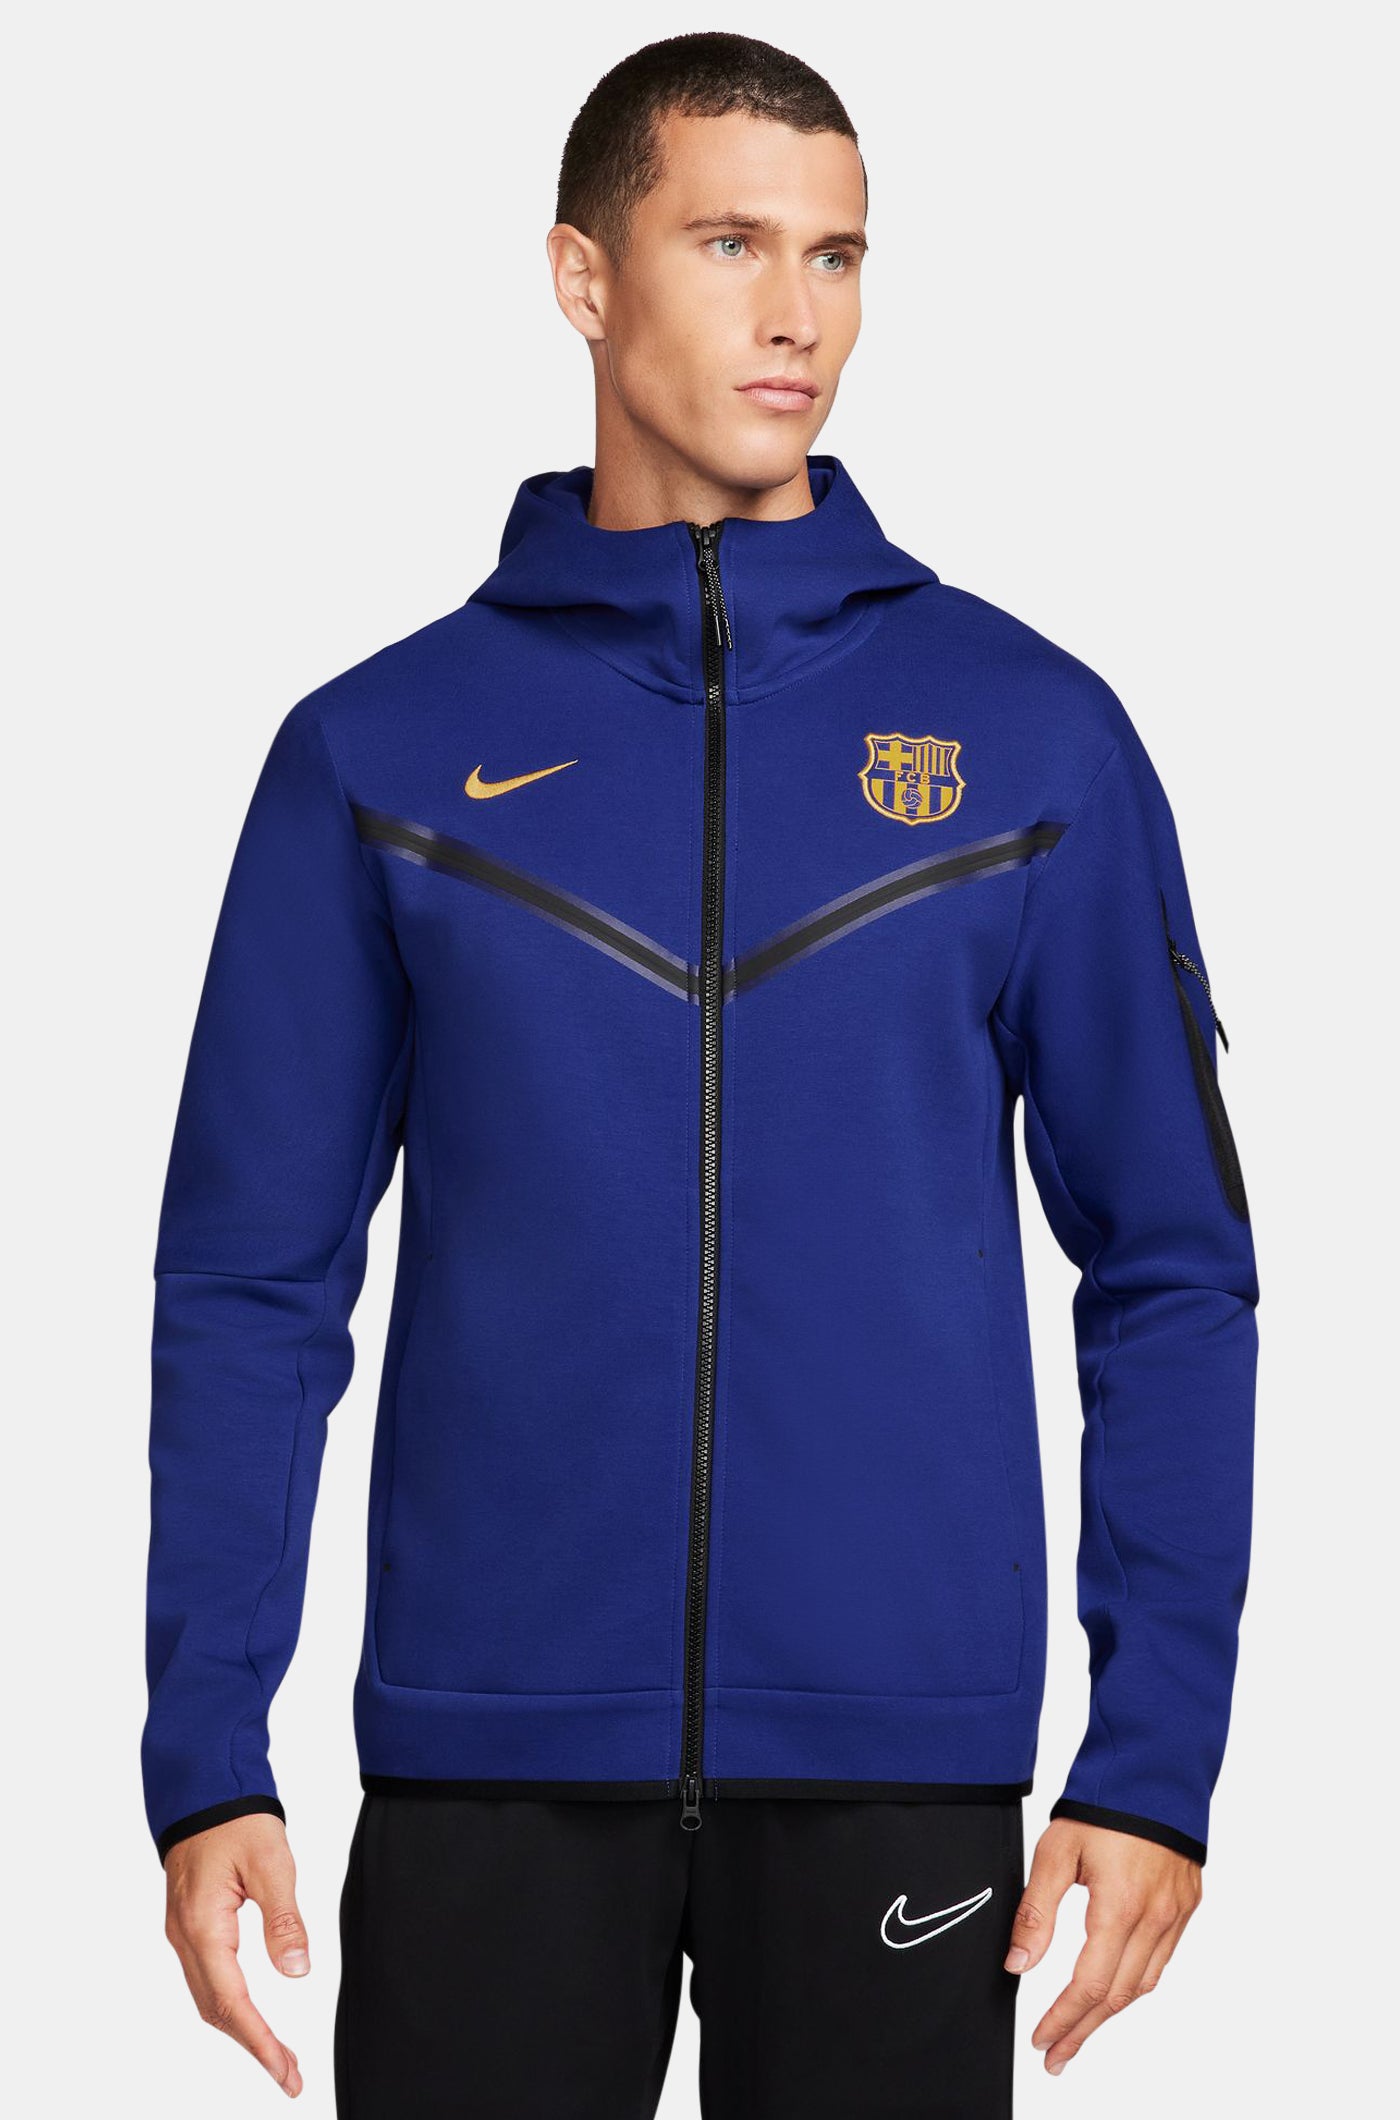 Tech jacket blue royal Barça Nike